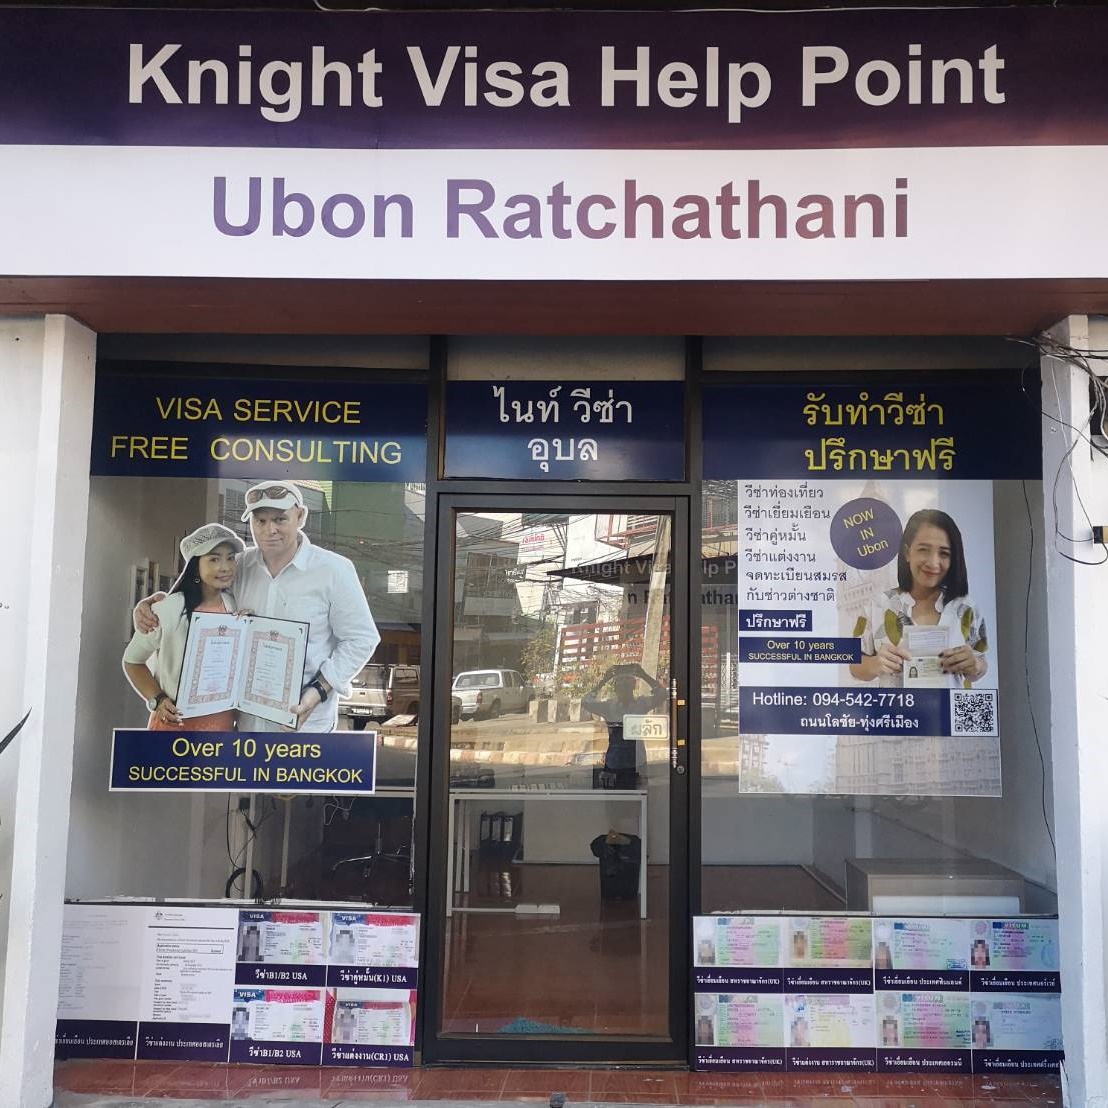 Knight Visa Help Point (Ubon Ratchathani)